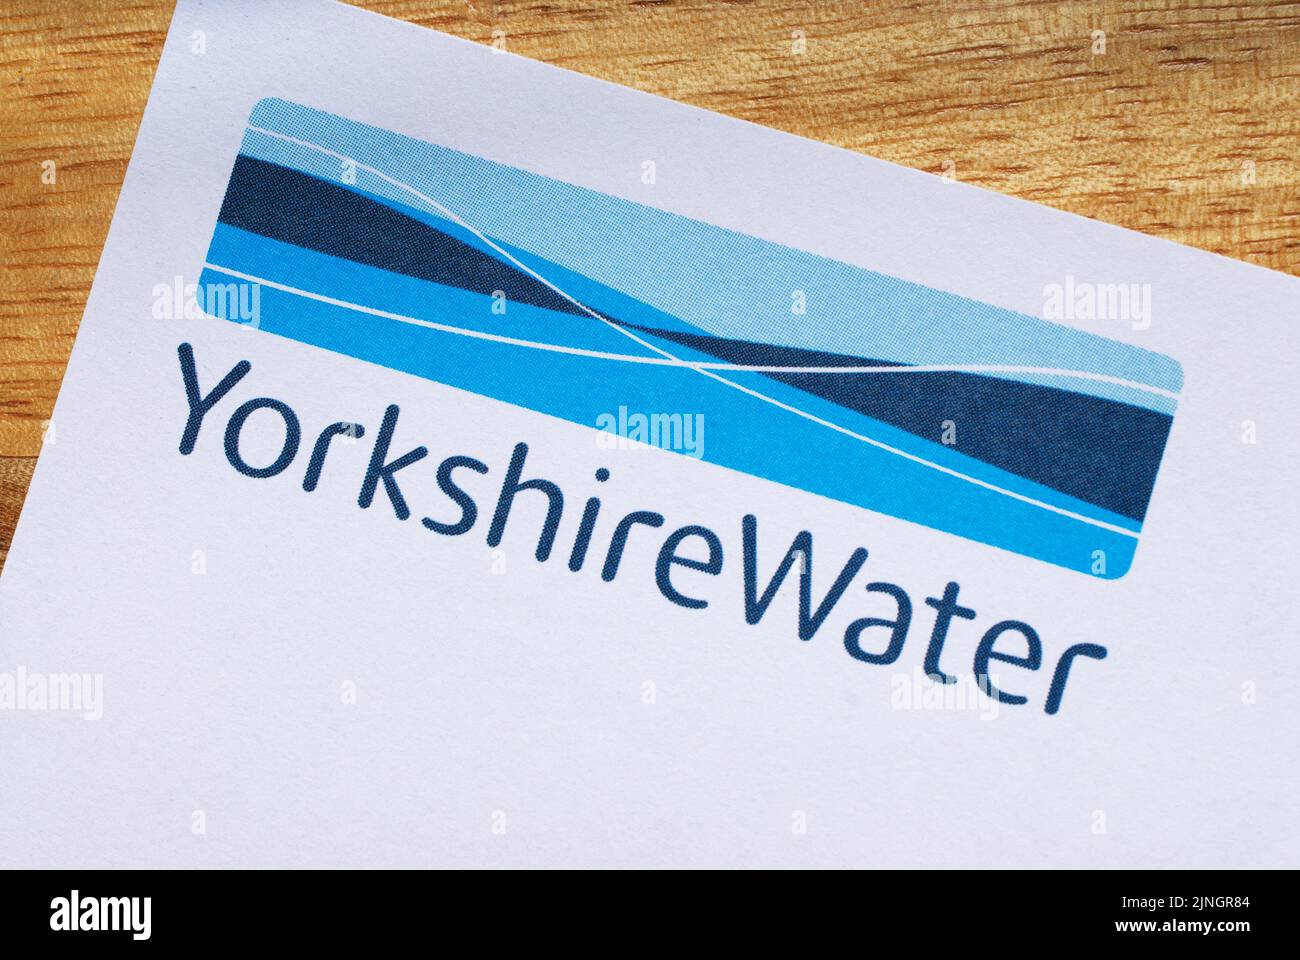 yorkshire-water-logo-on-letterhead-closeup-stock-photo-alamy